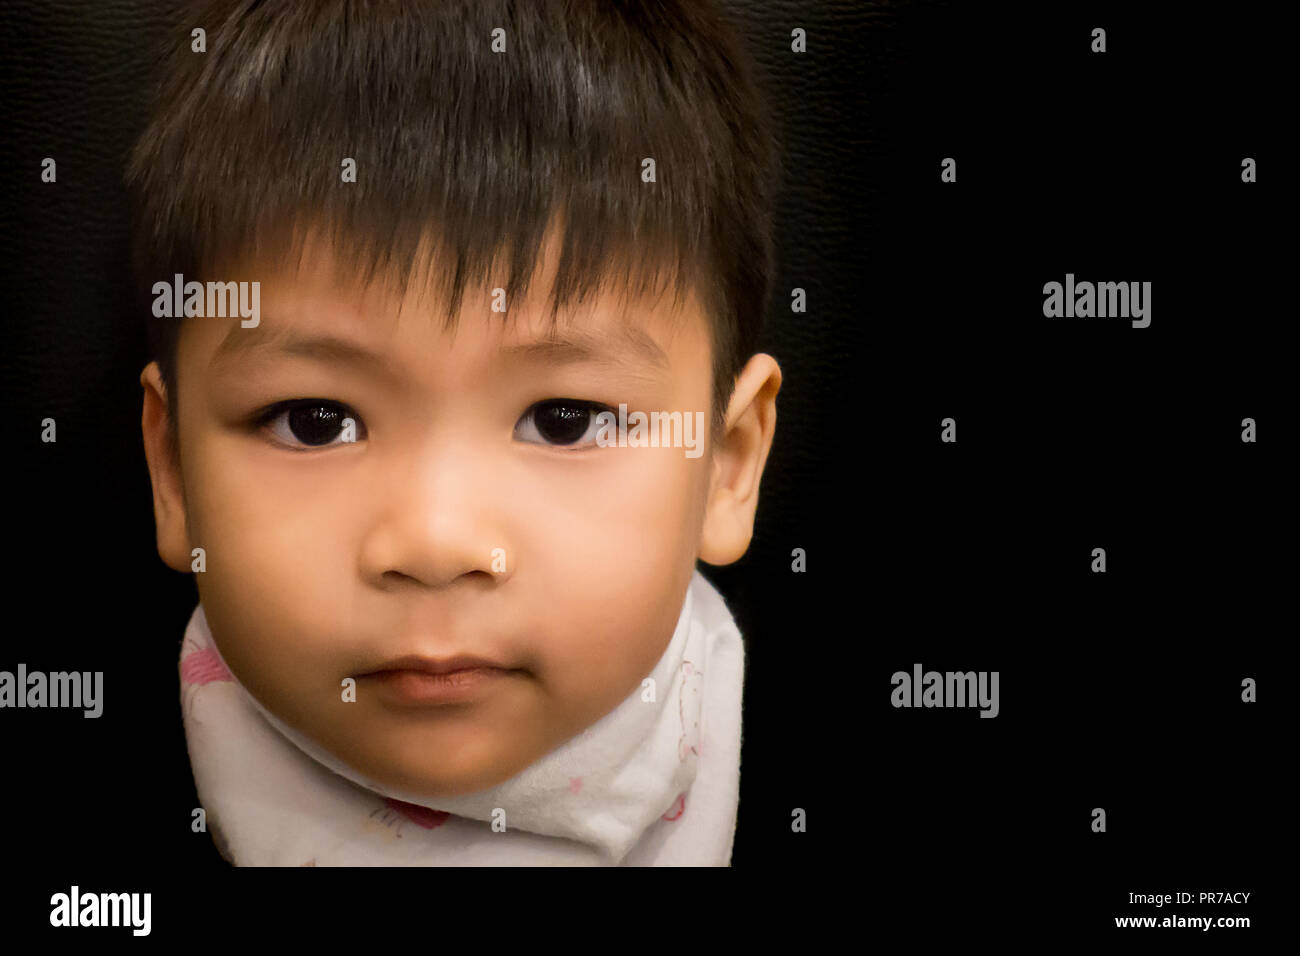 Sad Asian boy portrait on black background. Stock Photo